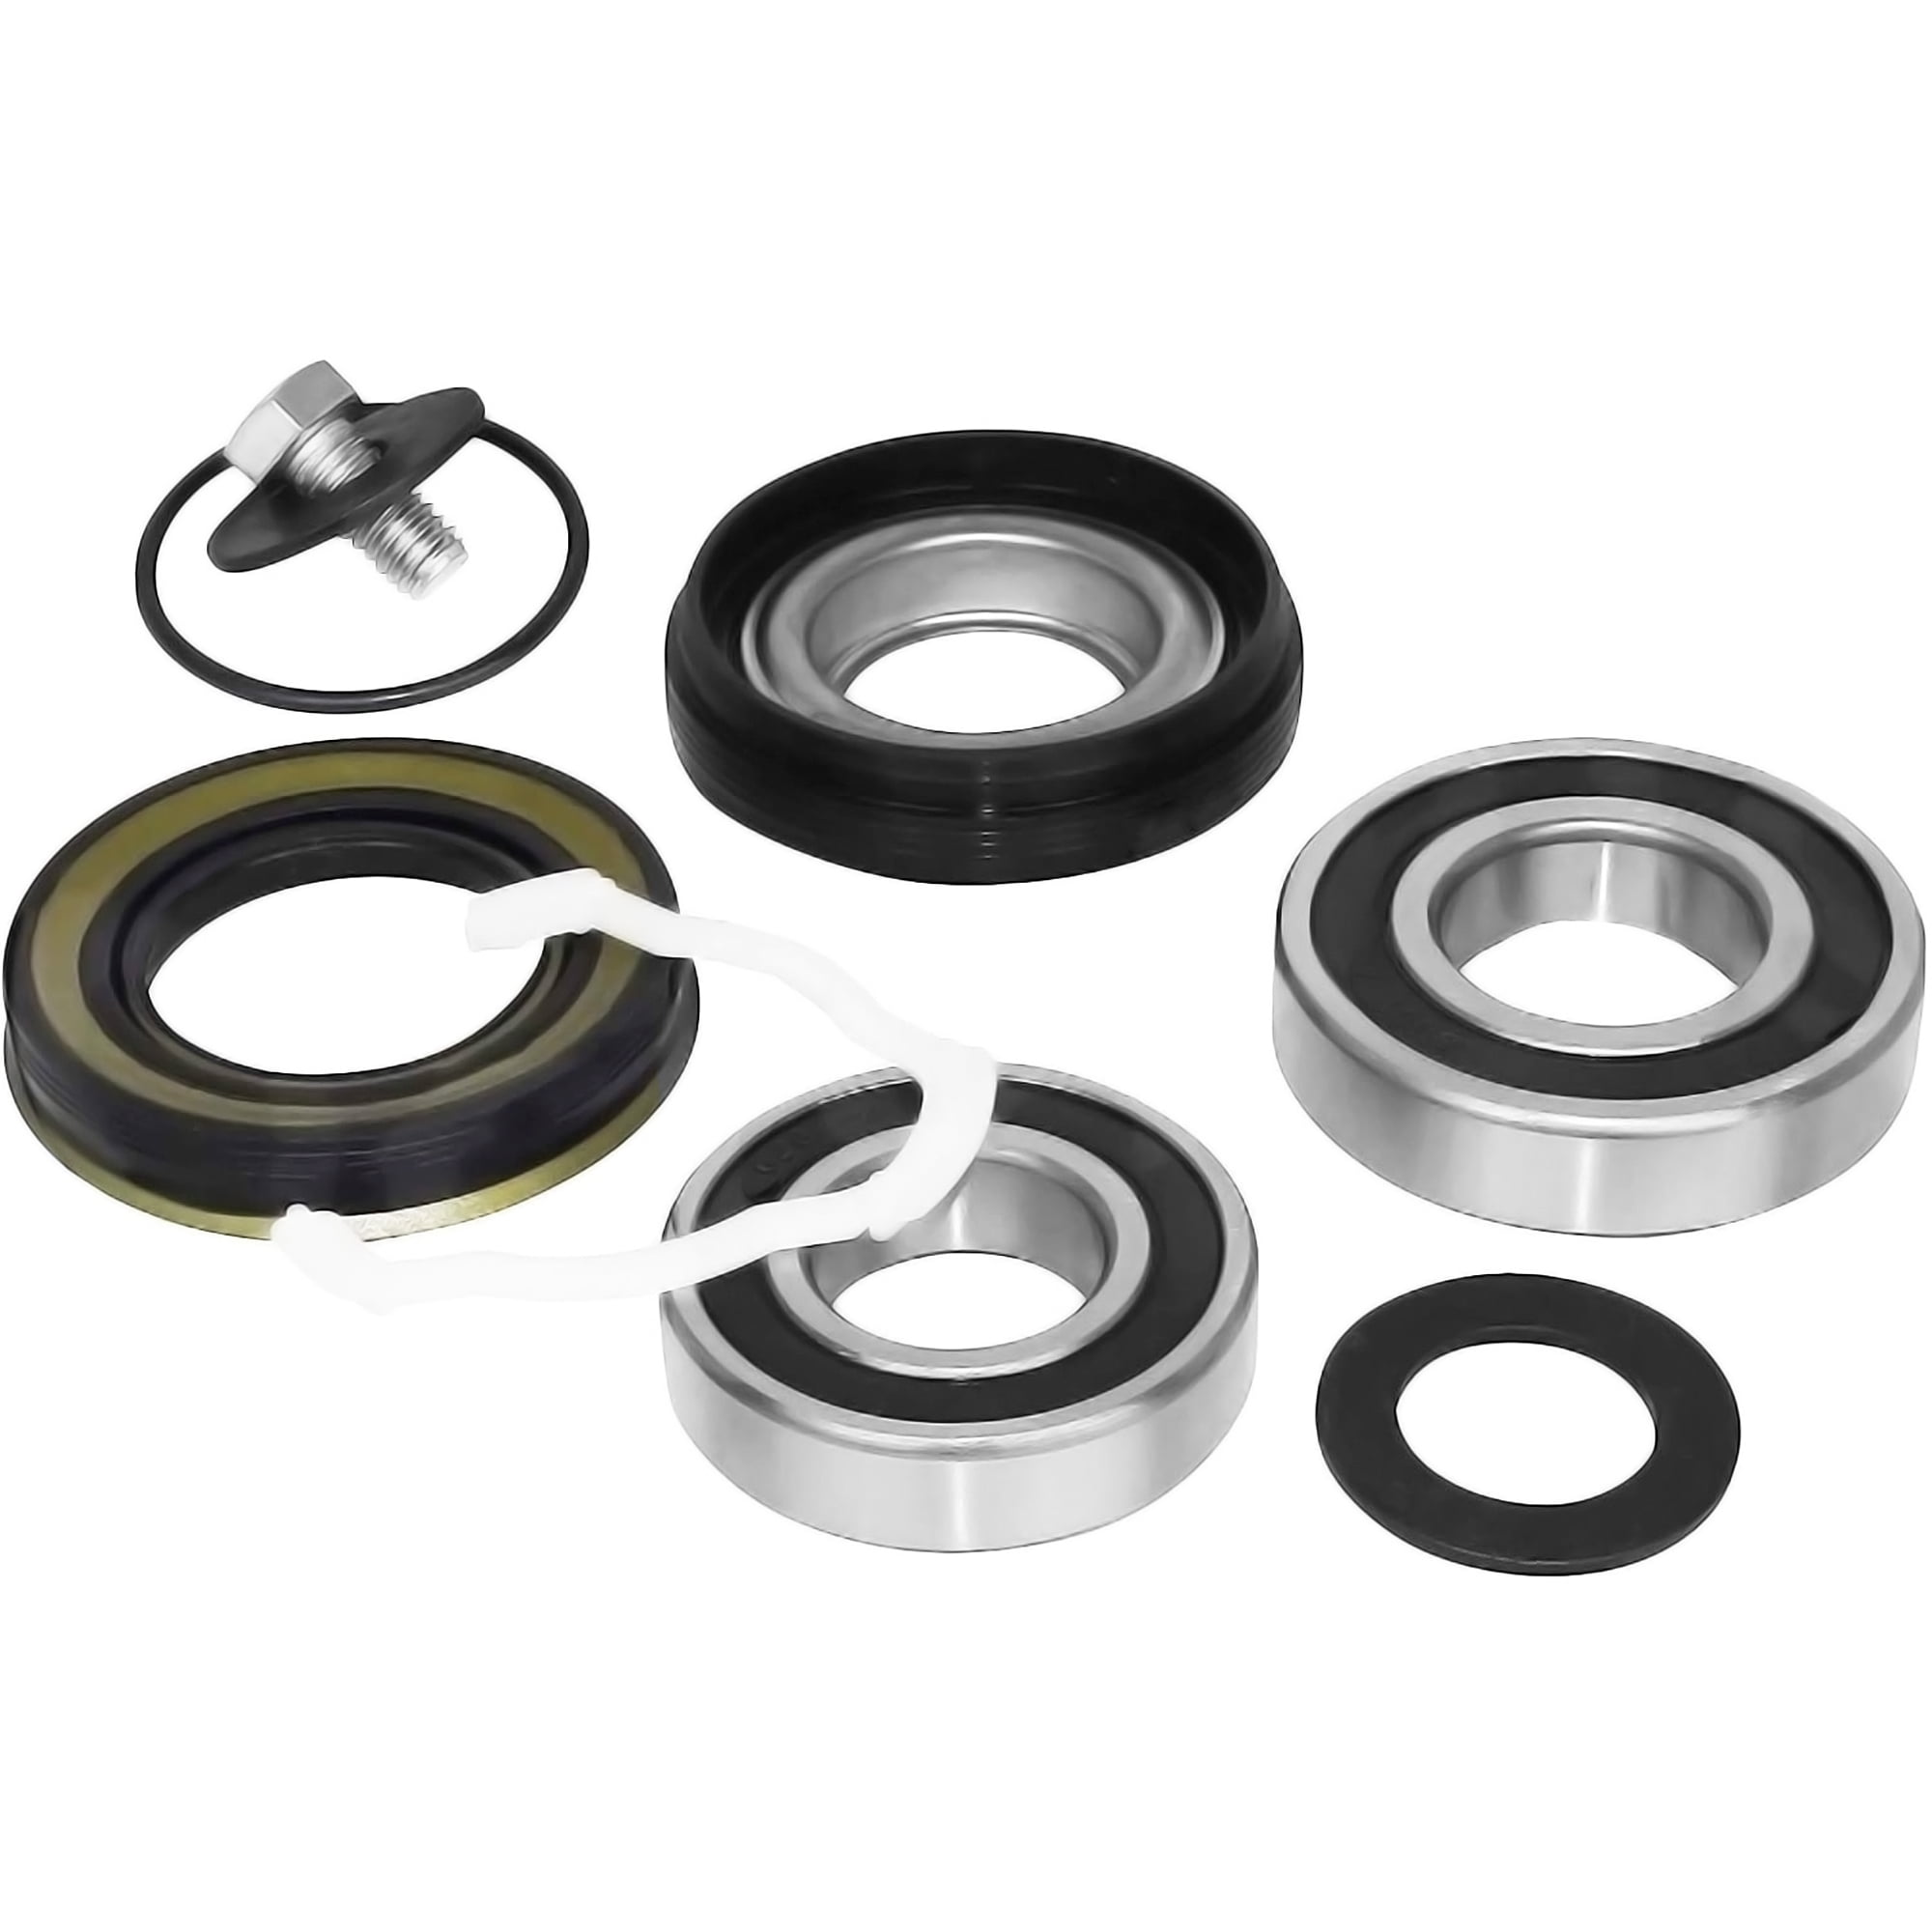 Compatible for HONDA TRX500FA Rubicon ATV Bearings & Seals Kit Rear Wheels 2001-2009 